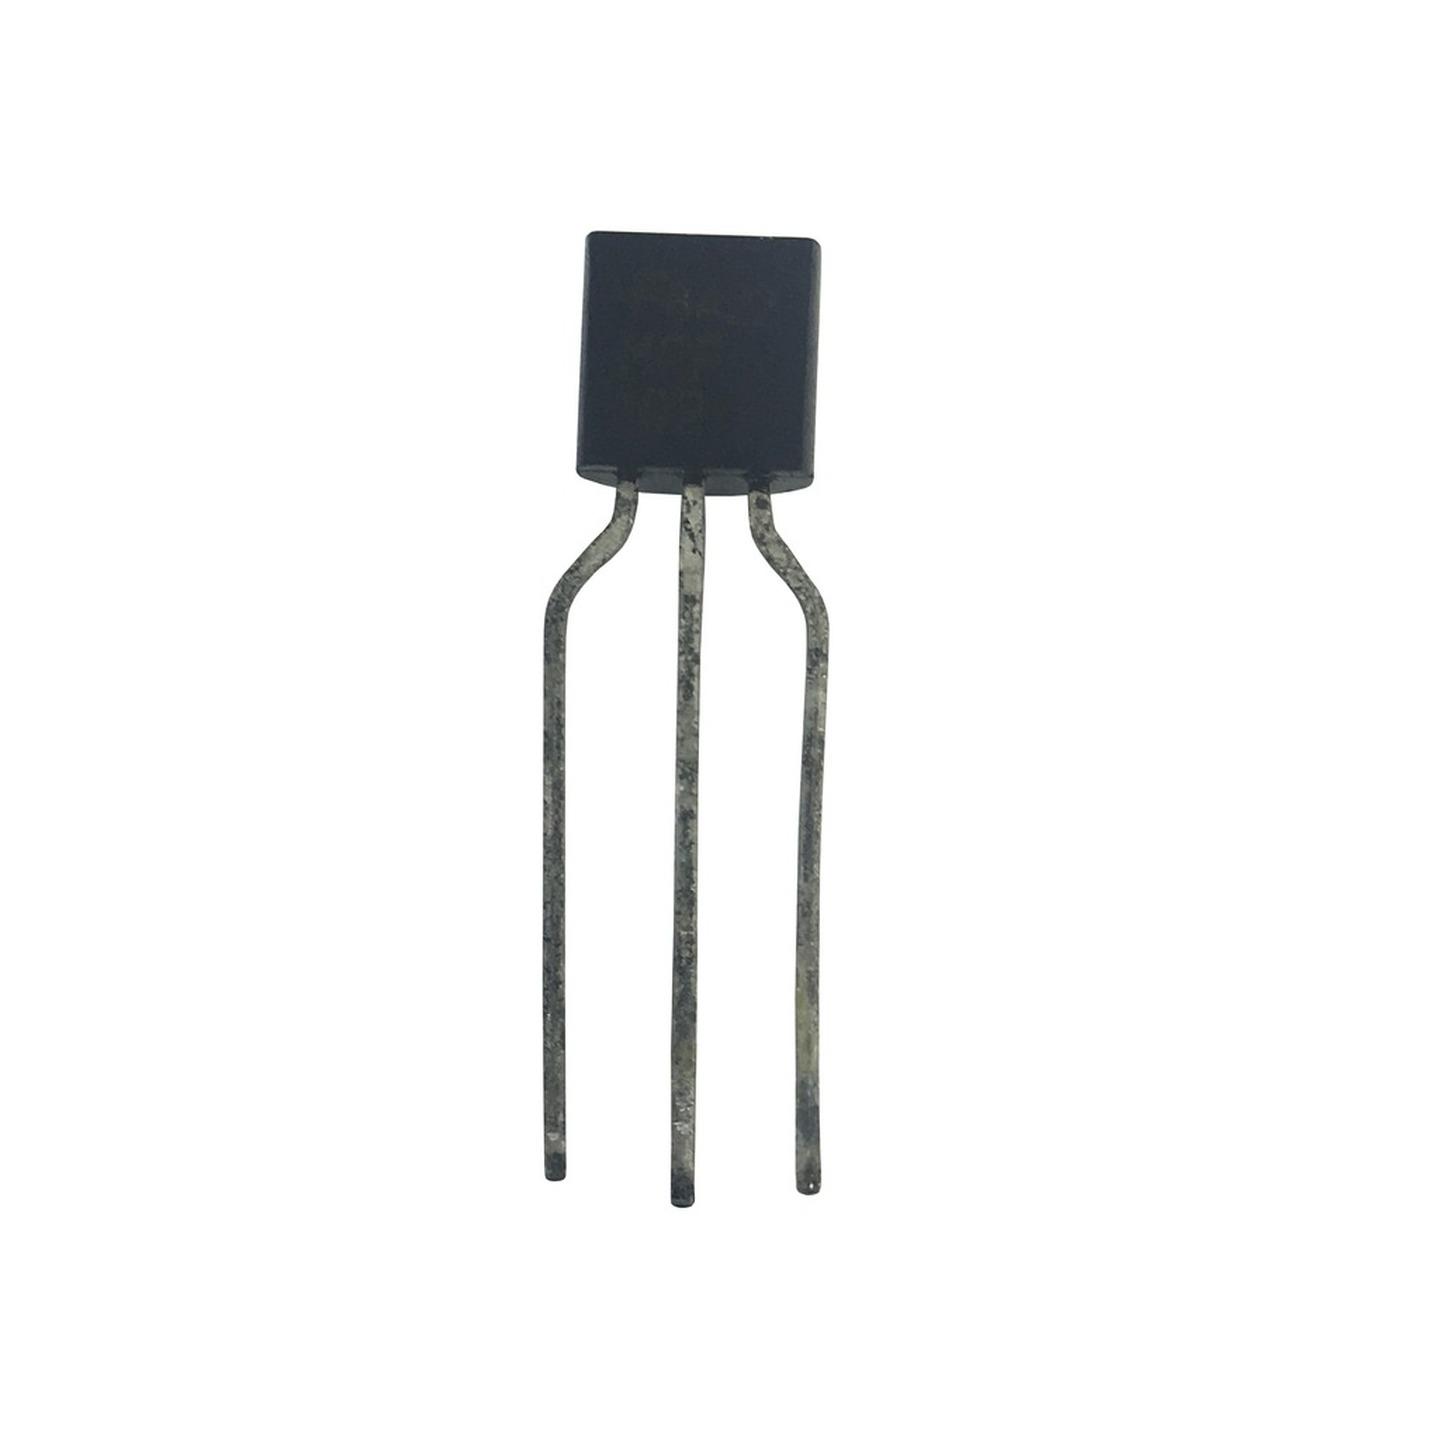 BC640 PNP Transistor